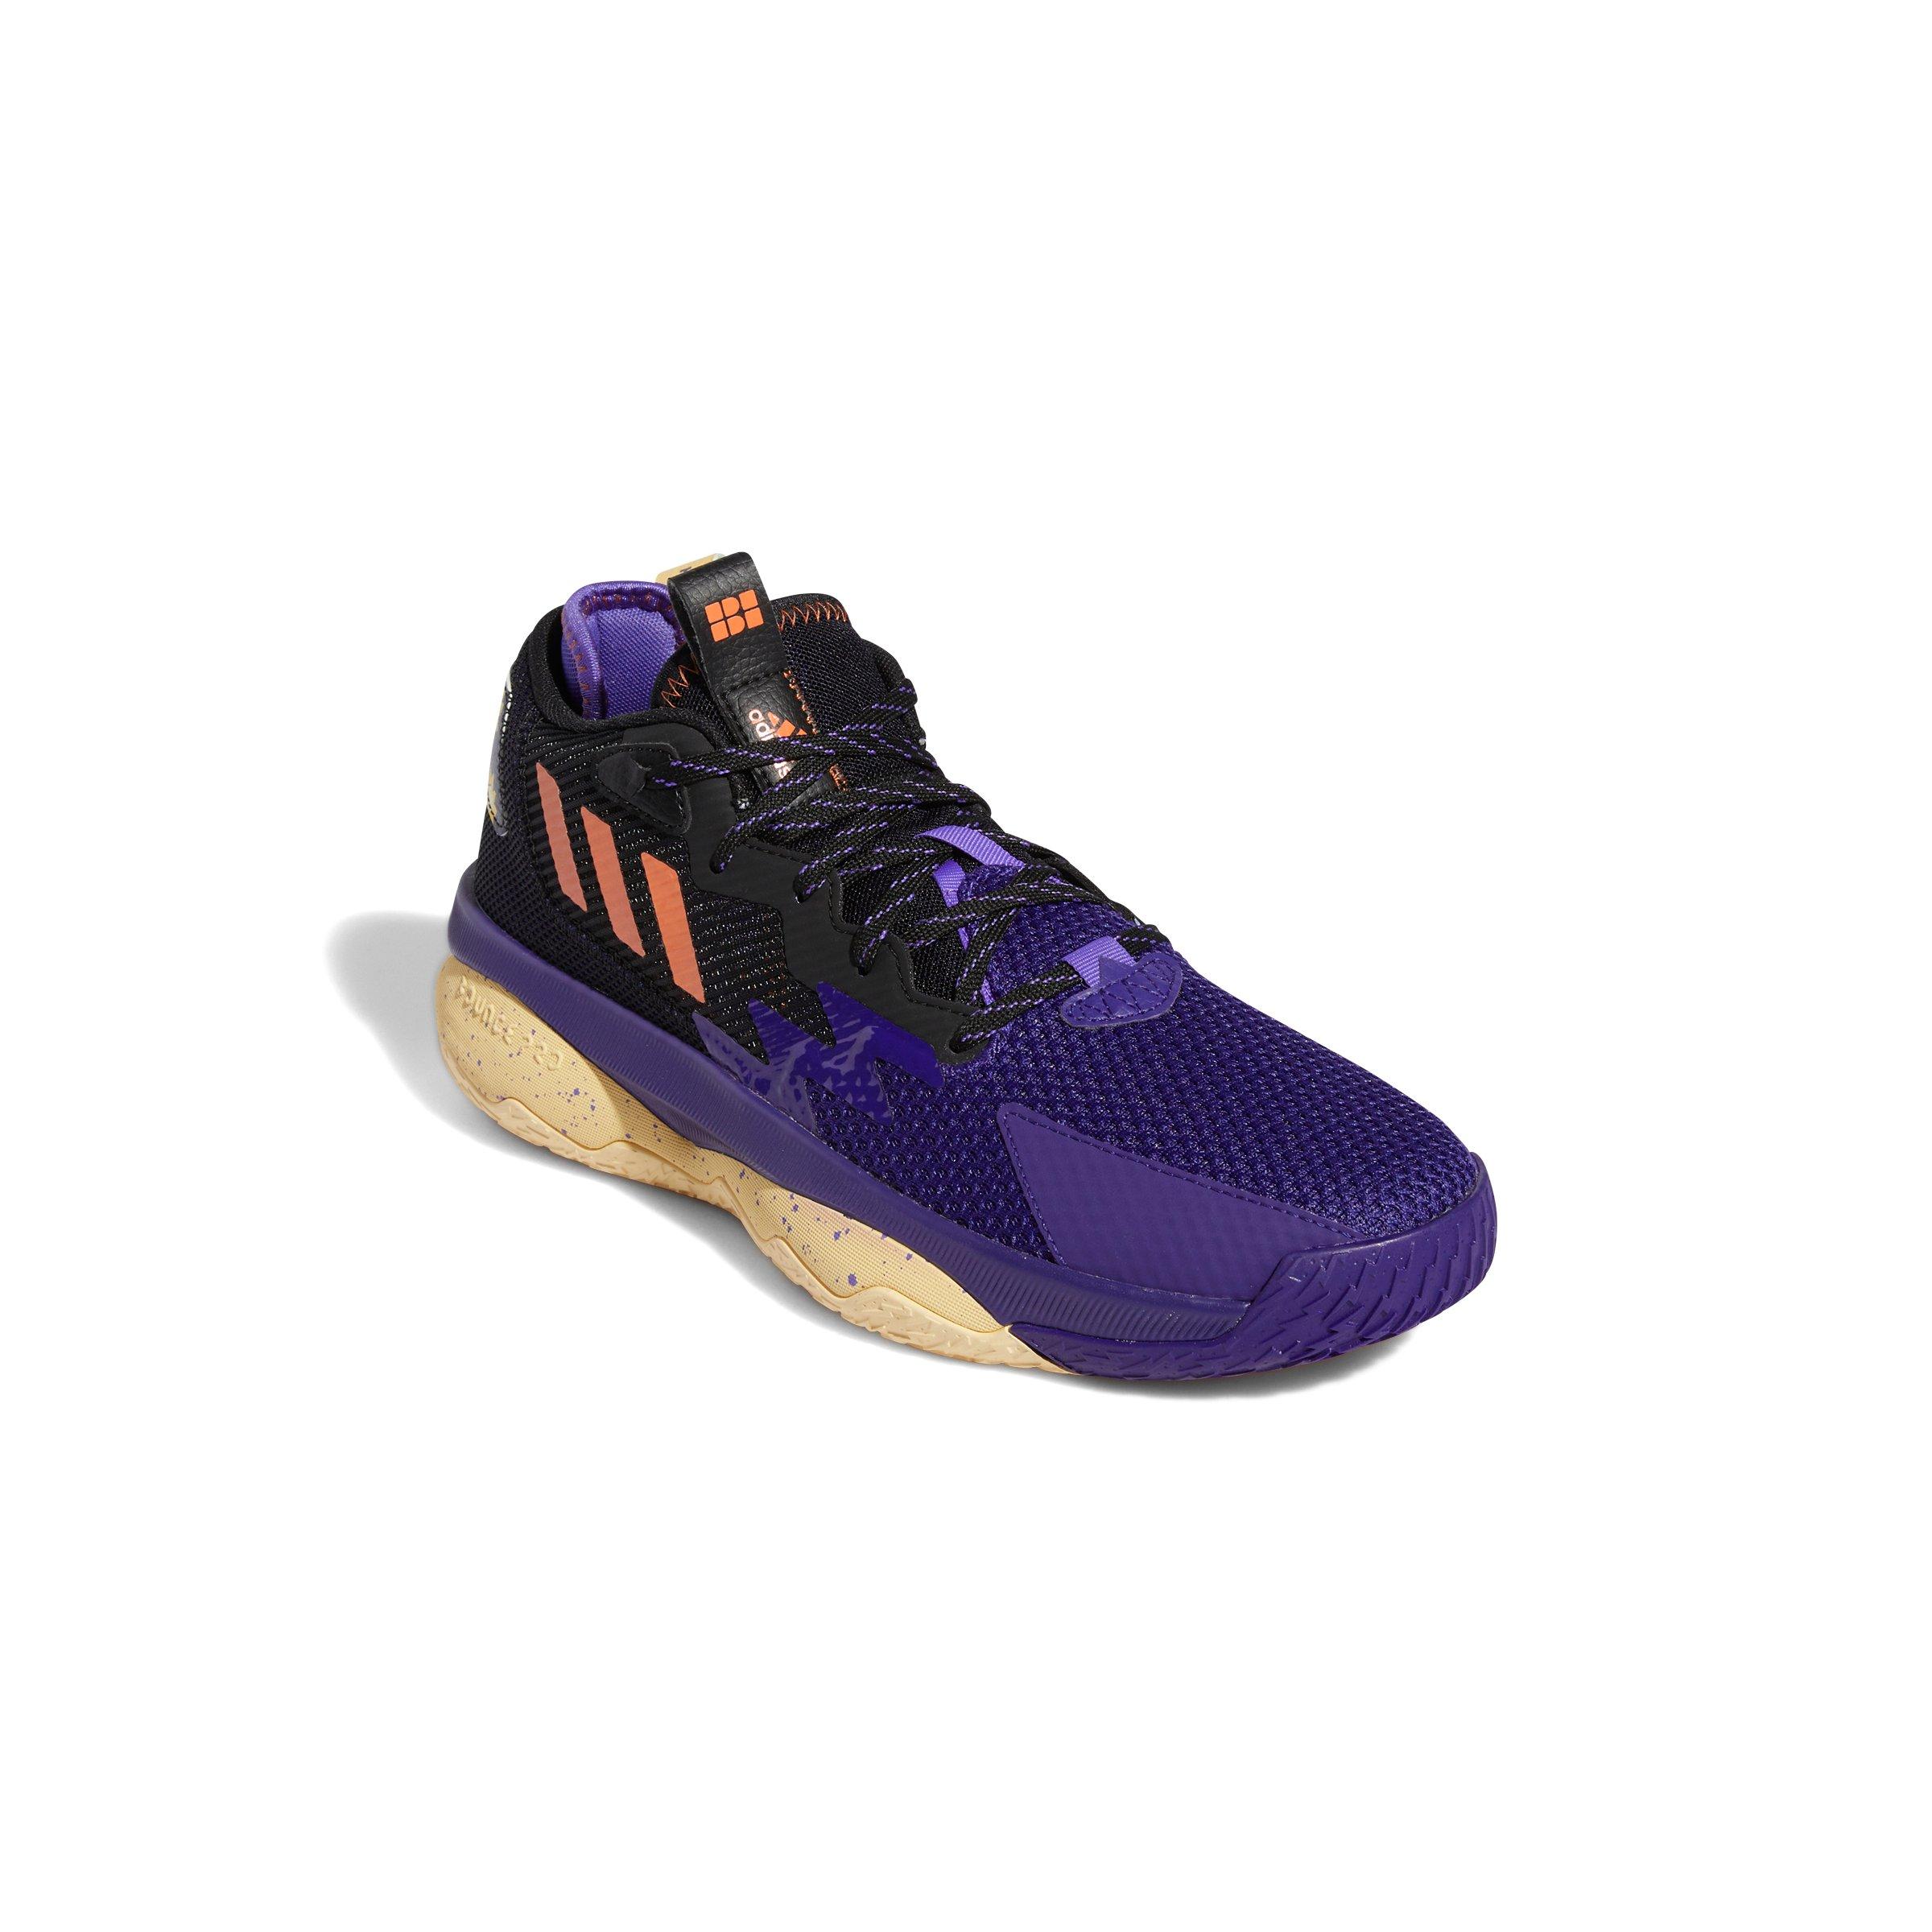 Adidas Dame 8 PE SAMPLE Louisville Cardinals Basketball Shoes Size 11.5  GZ9708